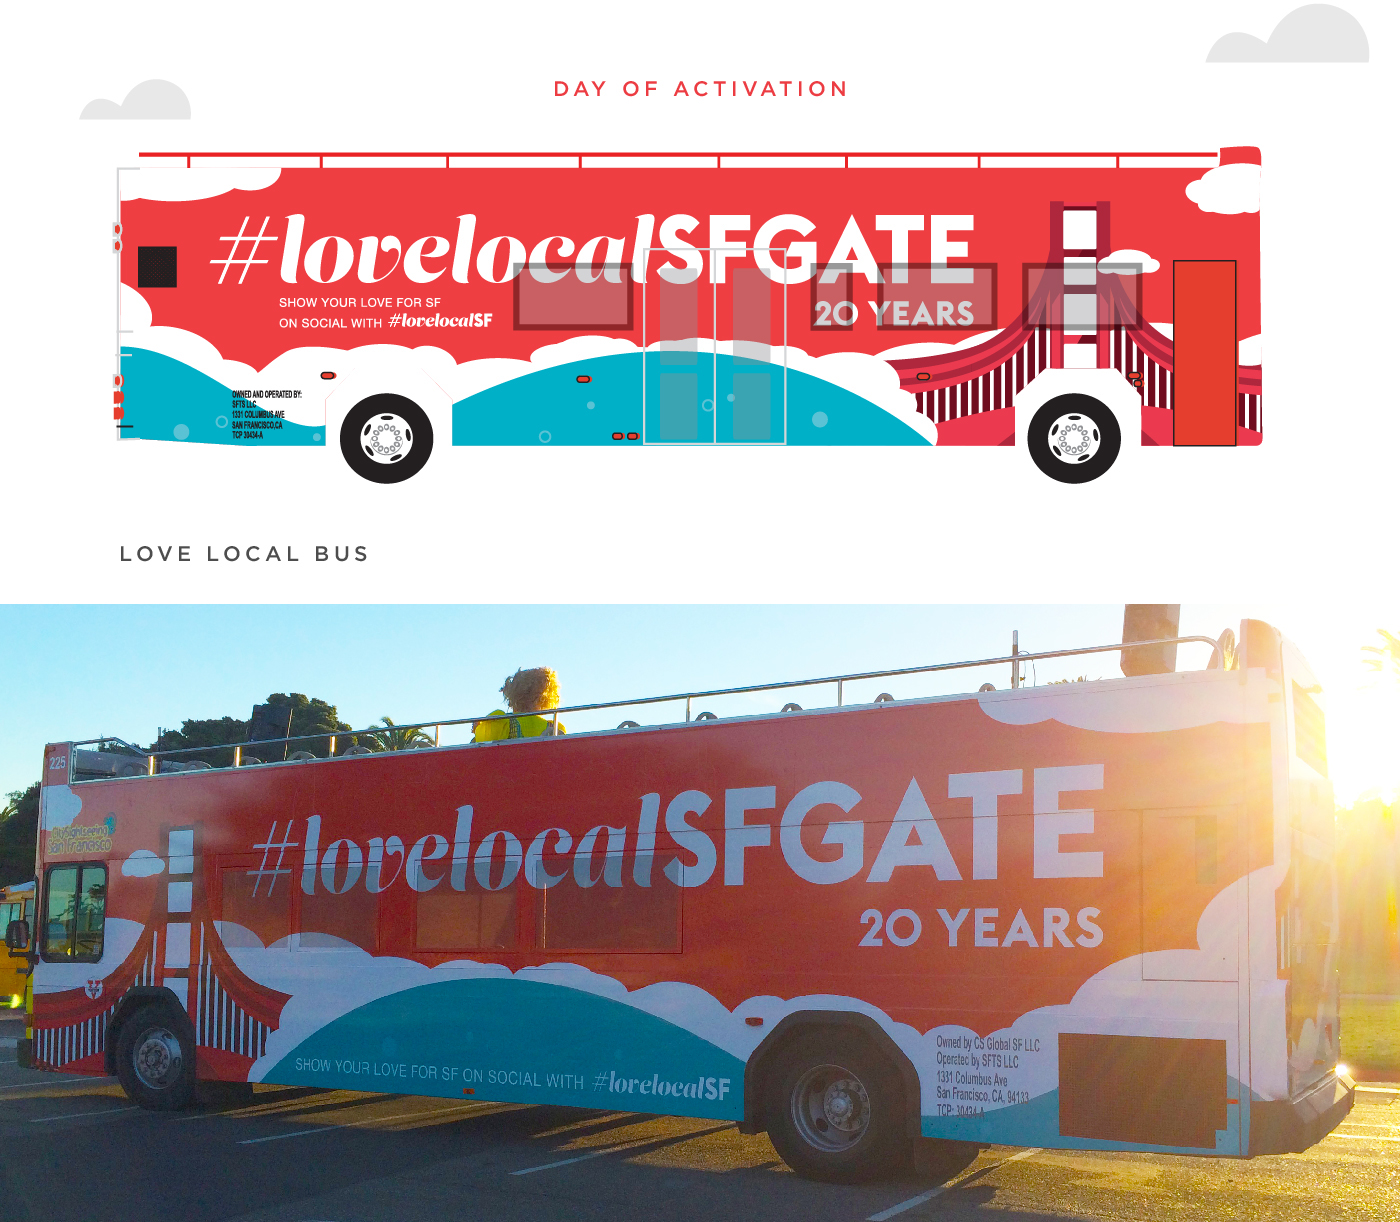 Adobe Portfolio Lovelocal san francisco invite Love city illustrated Event Promotional celebrate Gala design Bus Wrap newspaper news